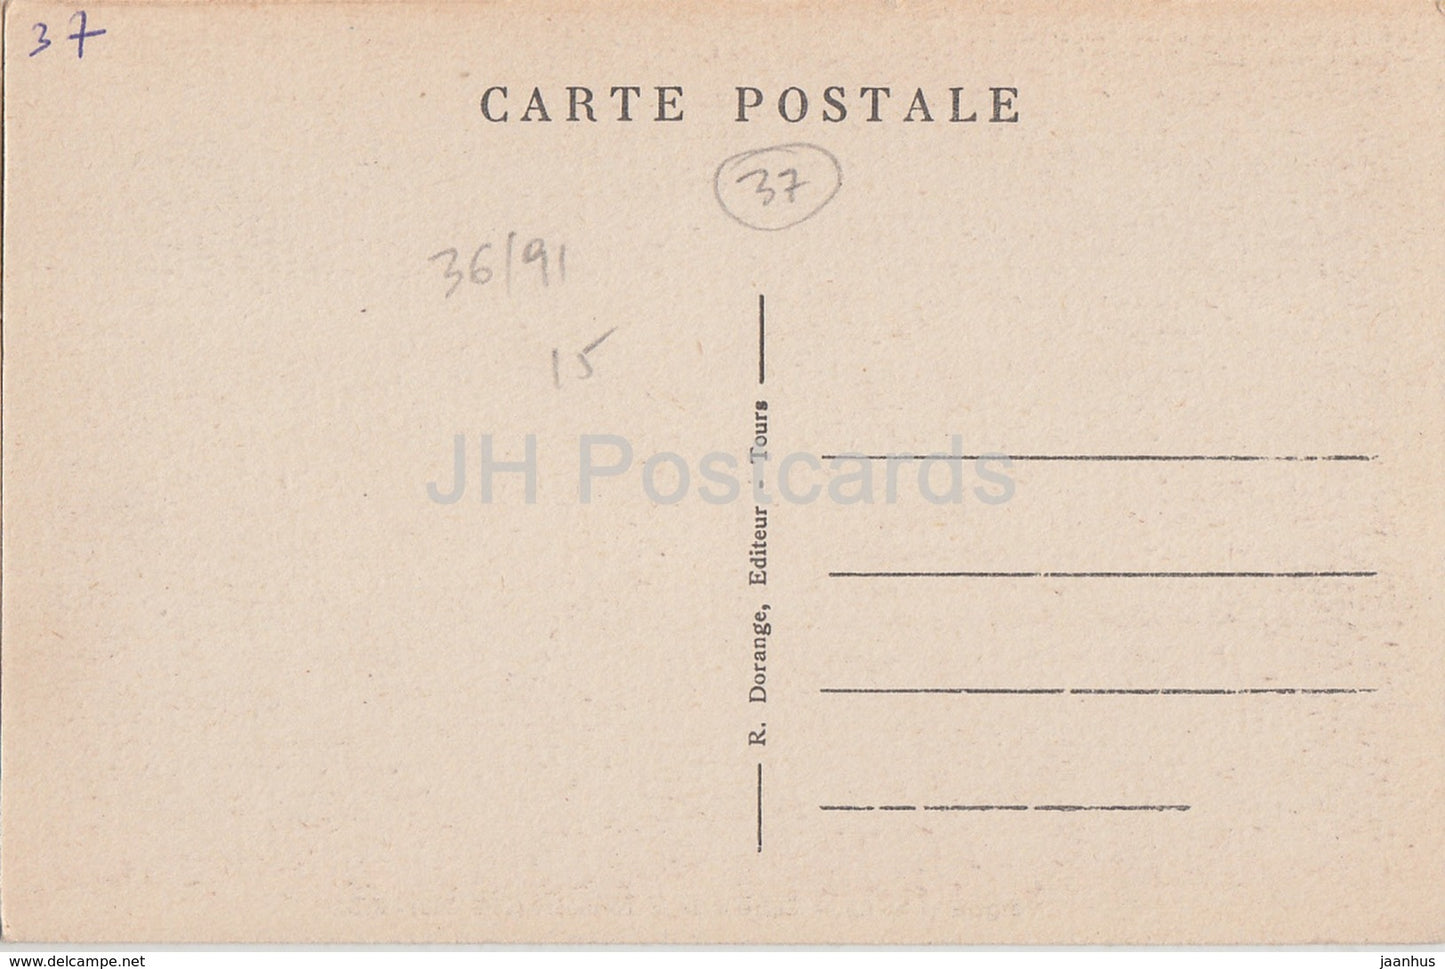 Veigne - Chateau de la Tortiniere - Cote Sud - castle - old postcard - France - unused